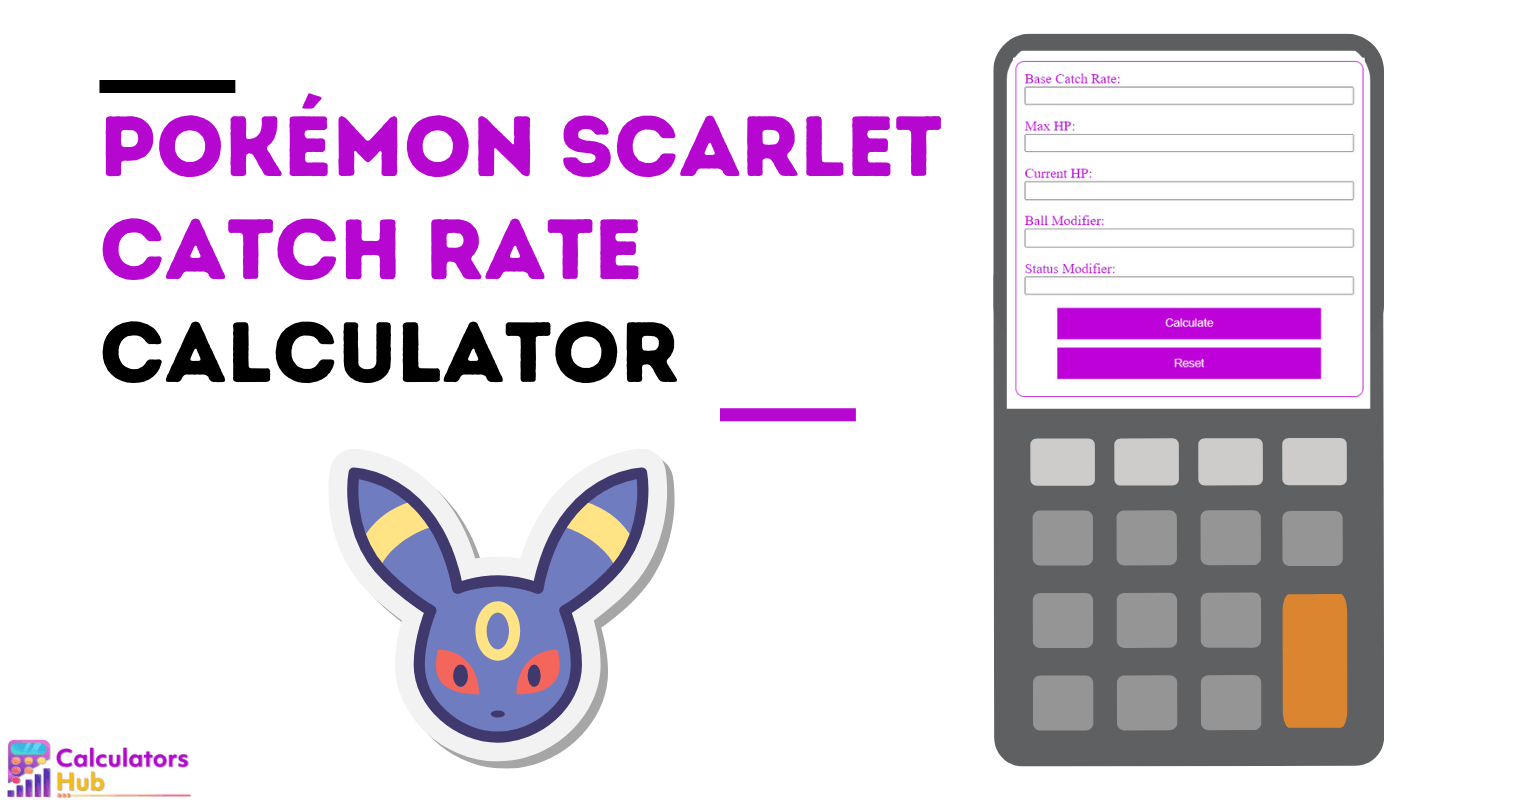 Pokémon Scarlet Catch Rate Calculator